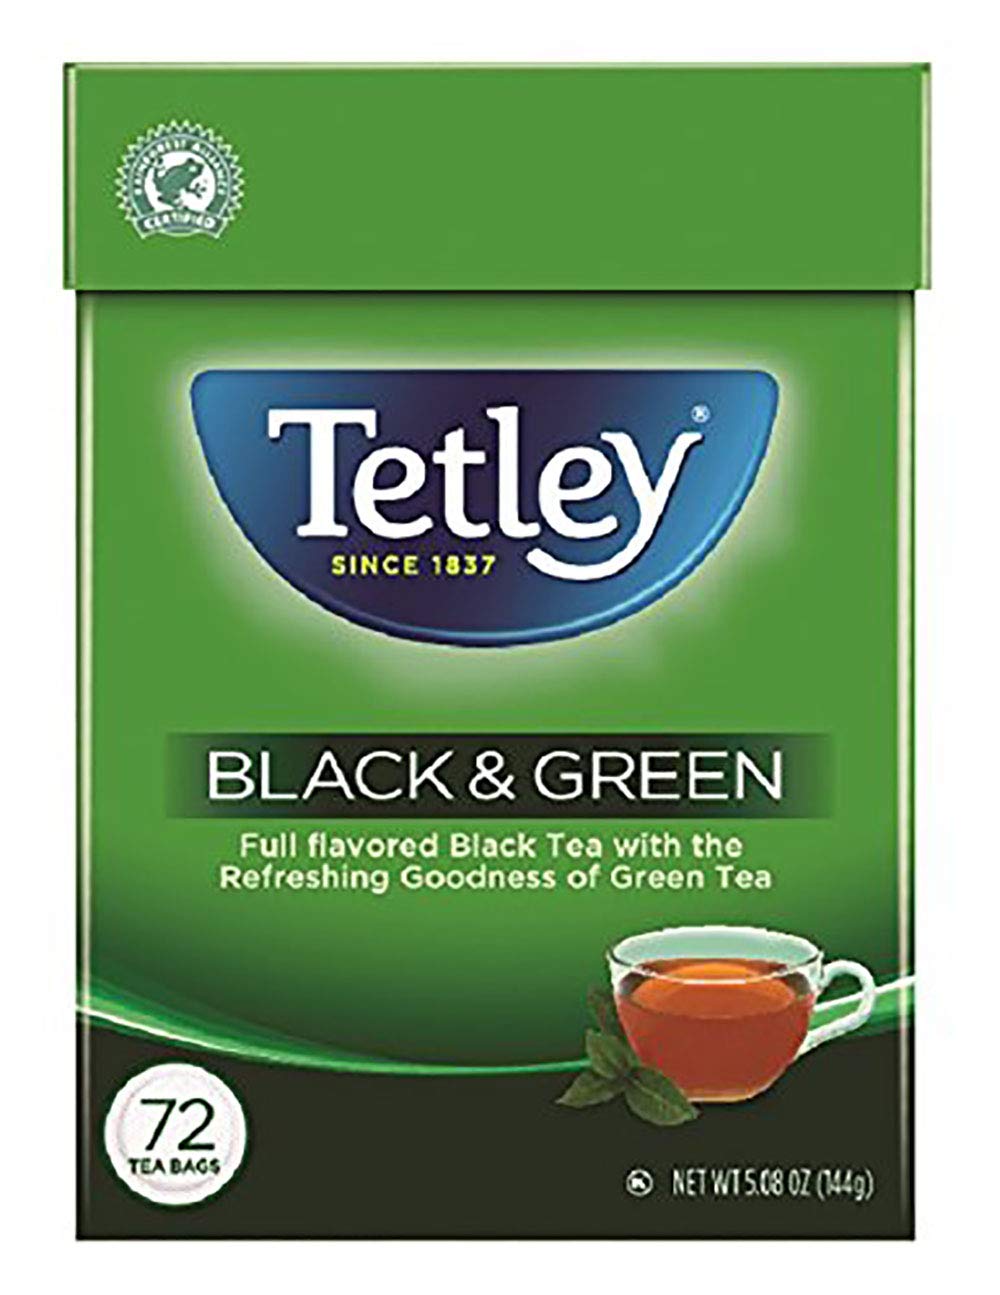 72-Ct Tetley Tea Bags (Black & Green) $2.85 w/ S&S + Free Shipping w/ Amazon Prime or $25+